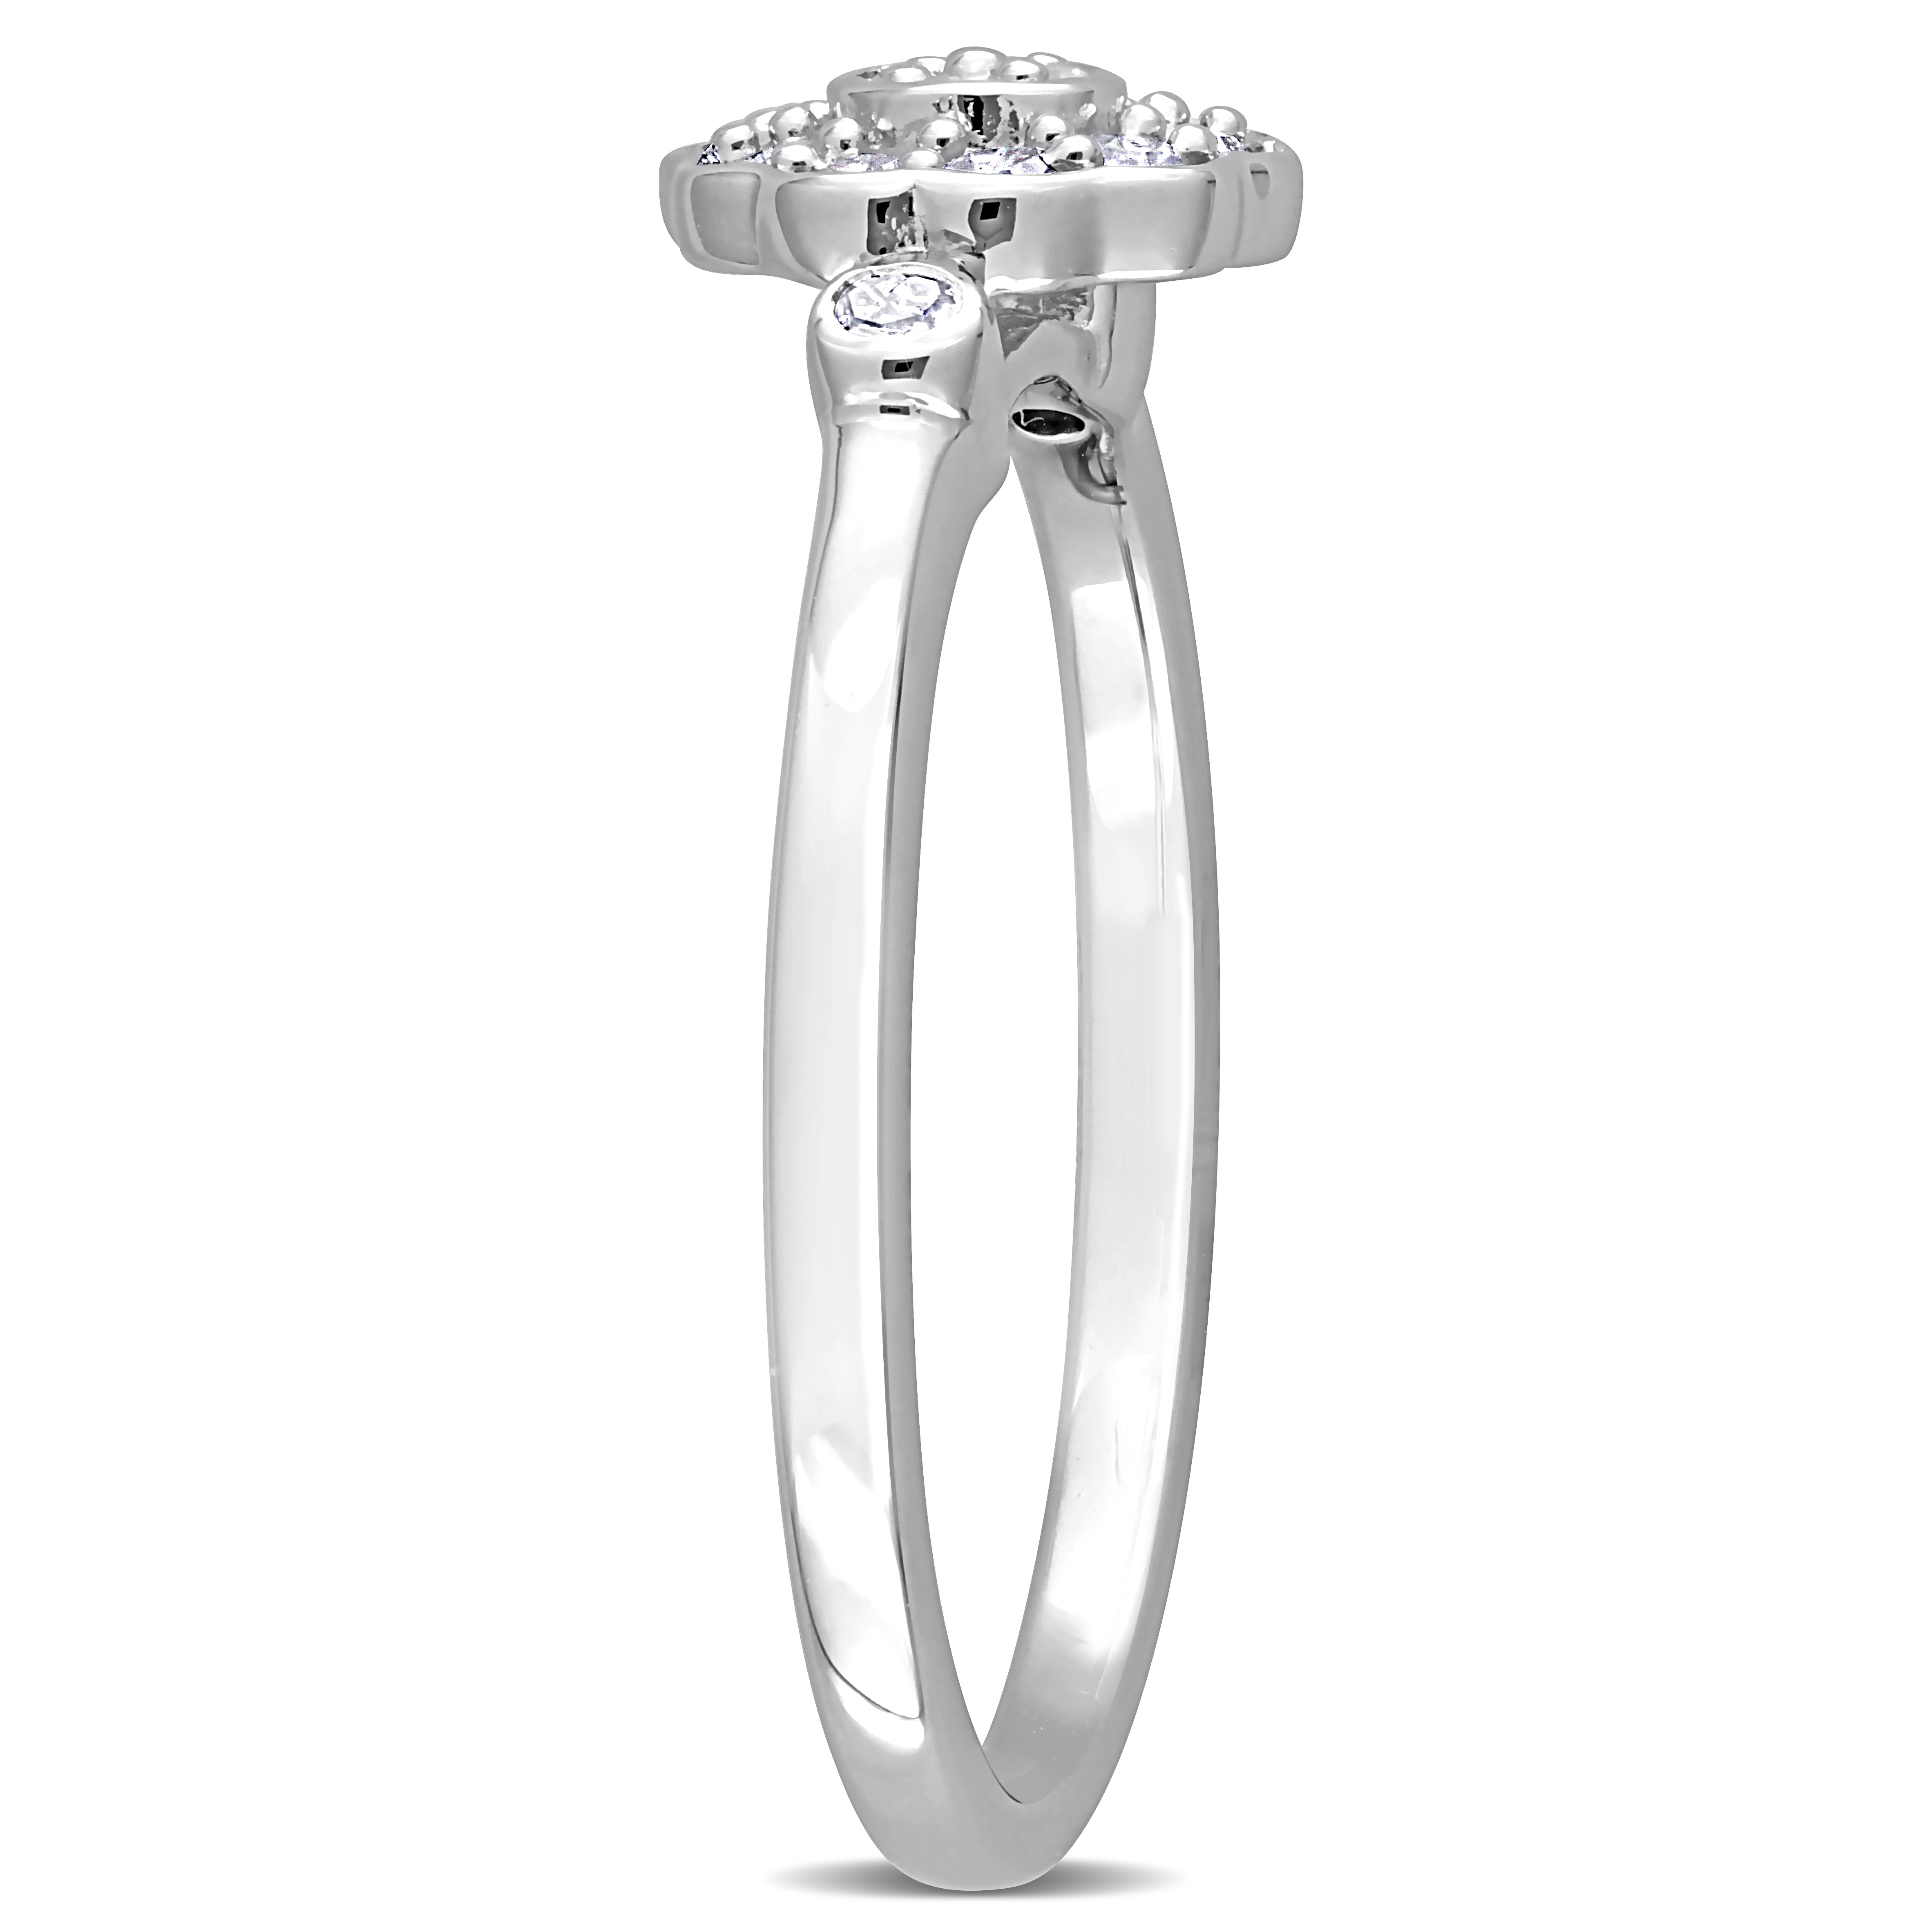 1/5 CT TDW Diamond Flower Ring in Sterling Silver